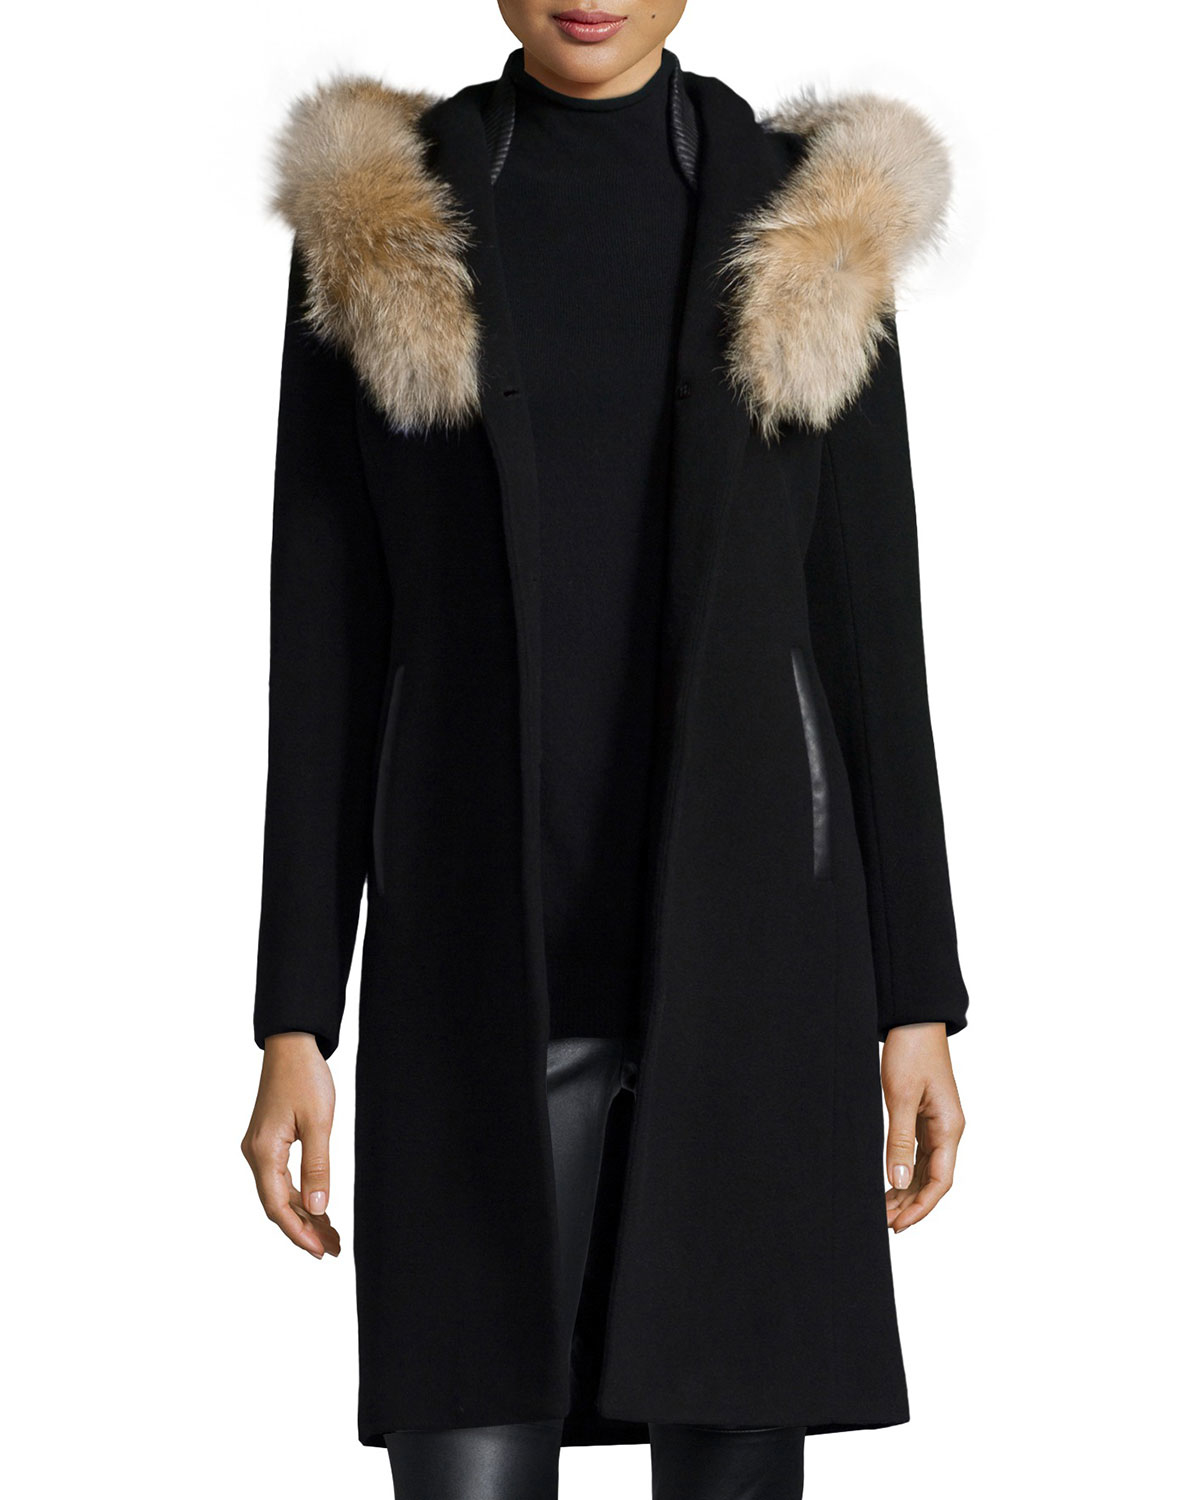 Lyst - Mackage Fur-trim Hooded Wool-blend Coat W/ Leather Detail in Black